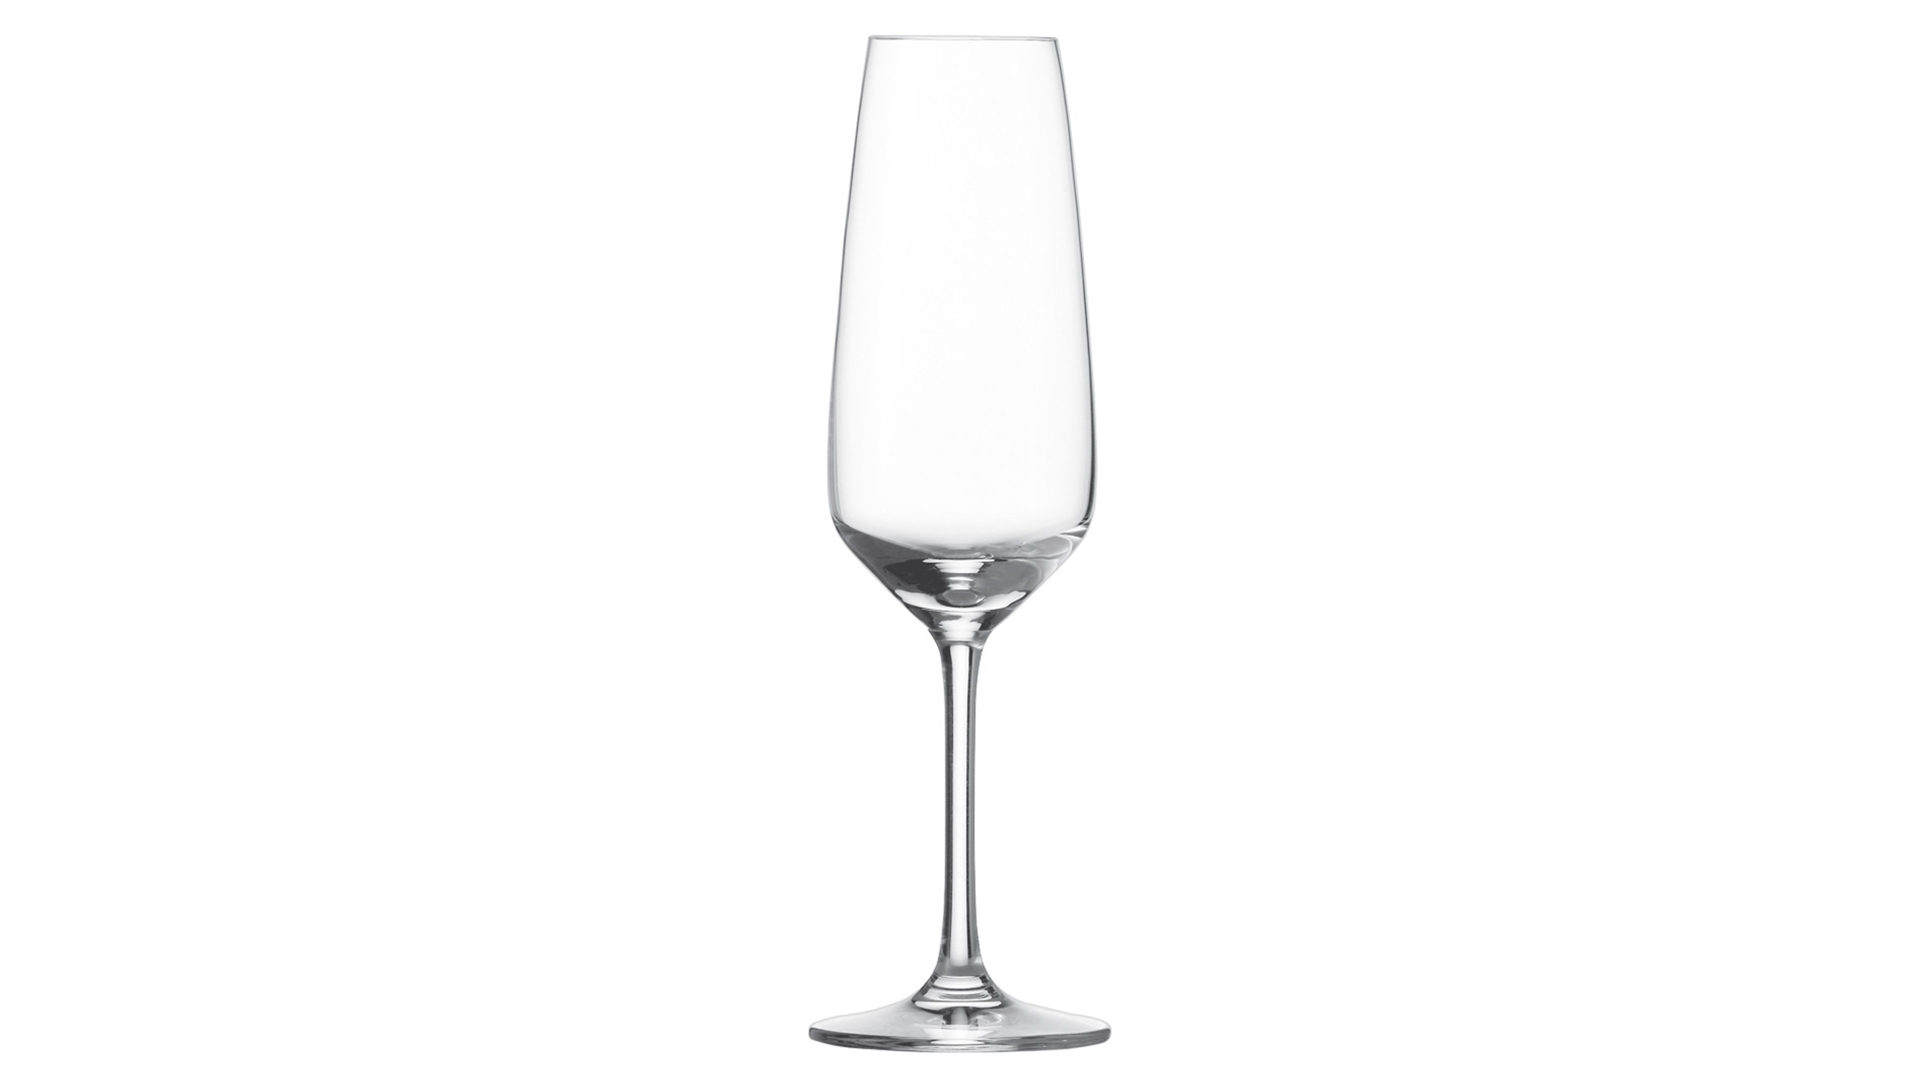 Sektglas Schott zwiesel aus Glas in Transparent SCHOTT ZWIESEL Sektglas Tulip Tritan®-Kristallglas – ca. 283 ml